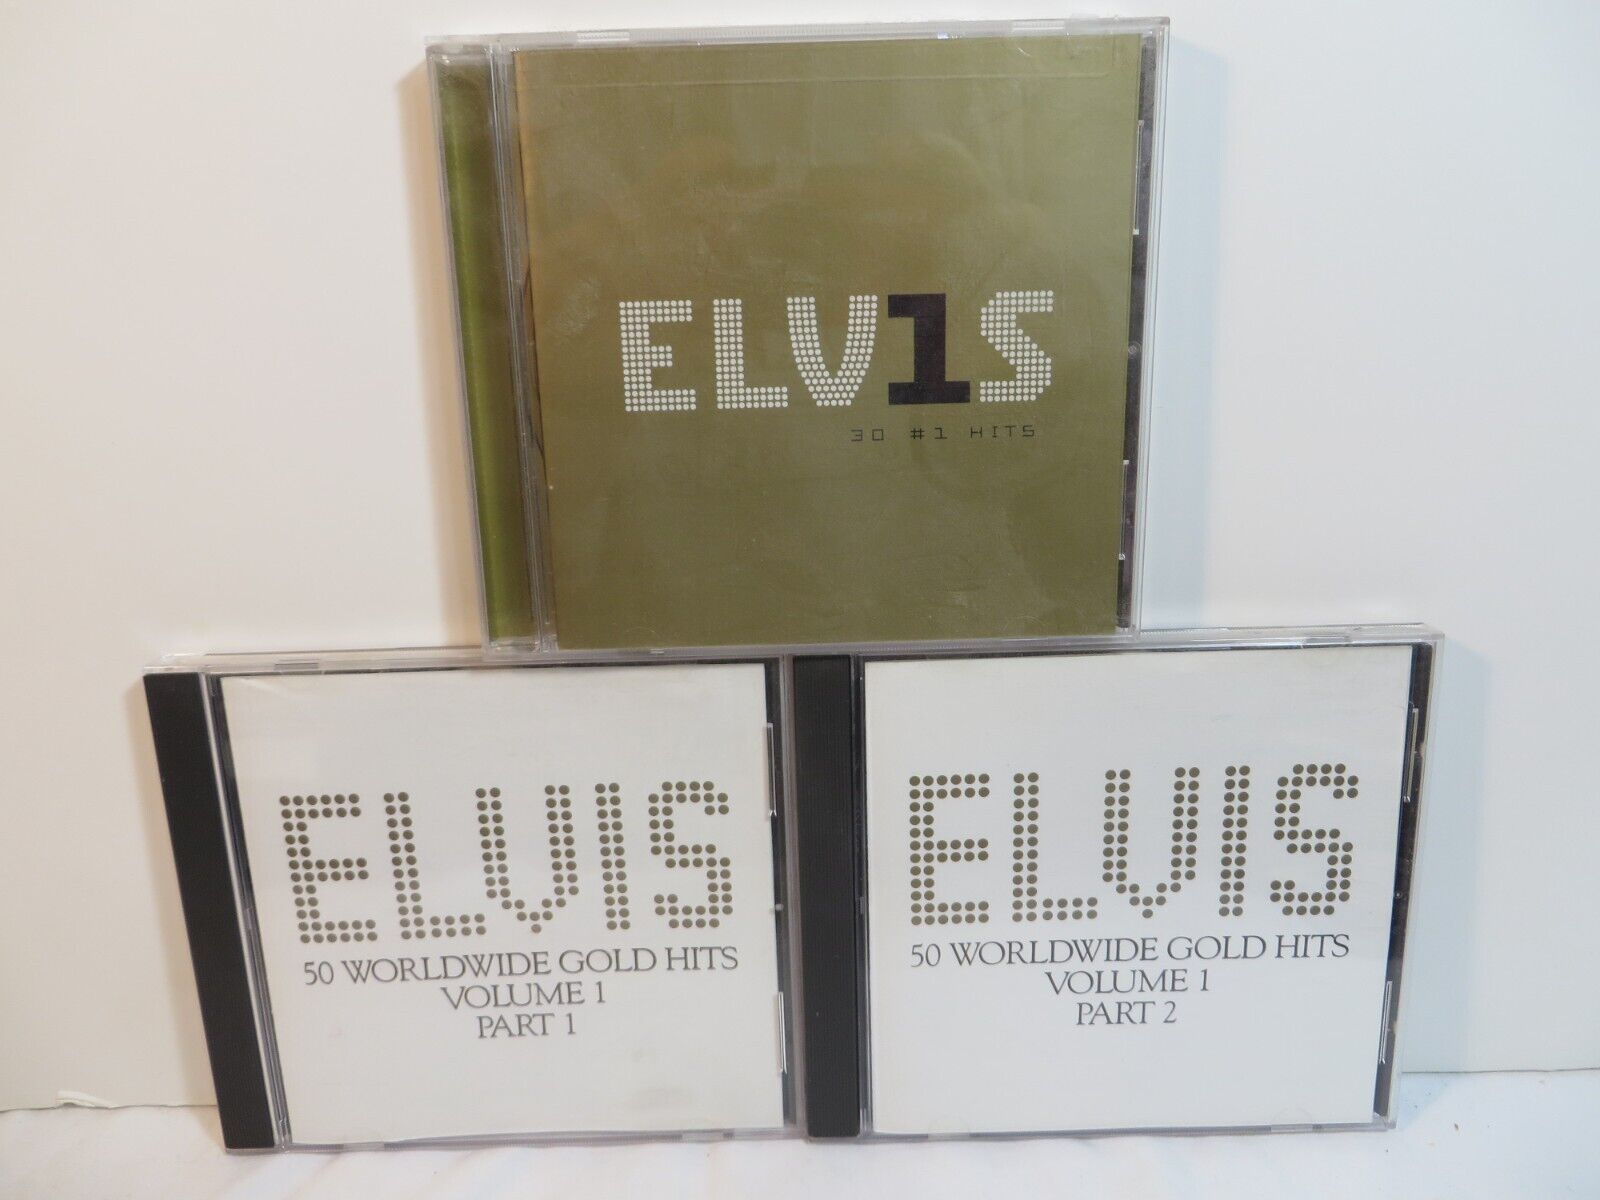 Elvis 50 Worldwide Gold Hits: Vol. 1, Part 1 & Part & 30 #1 Hits